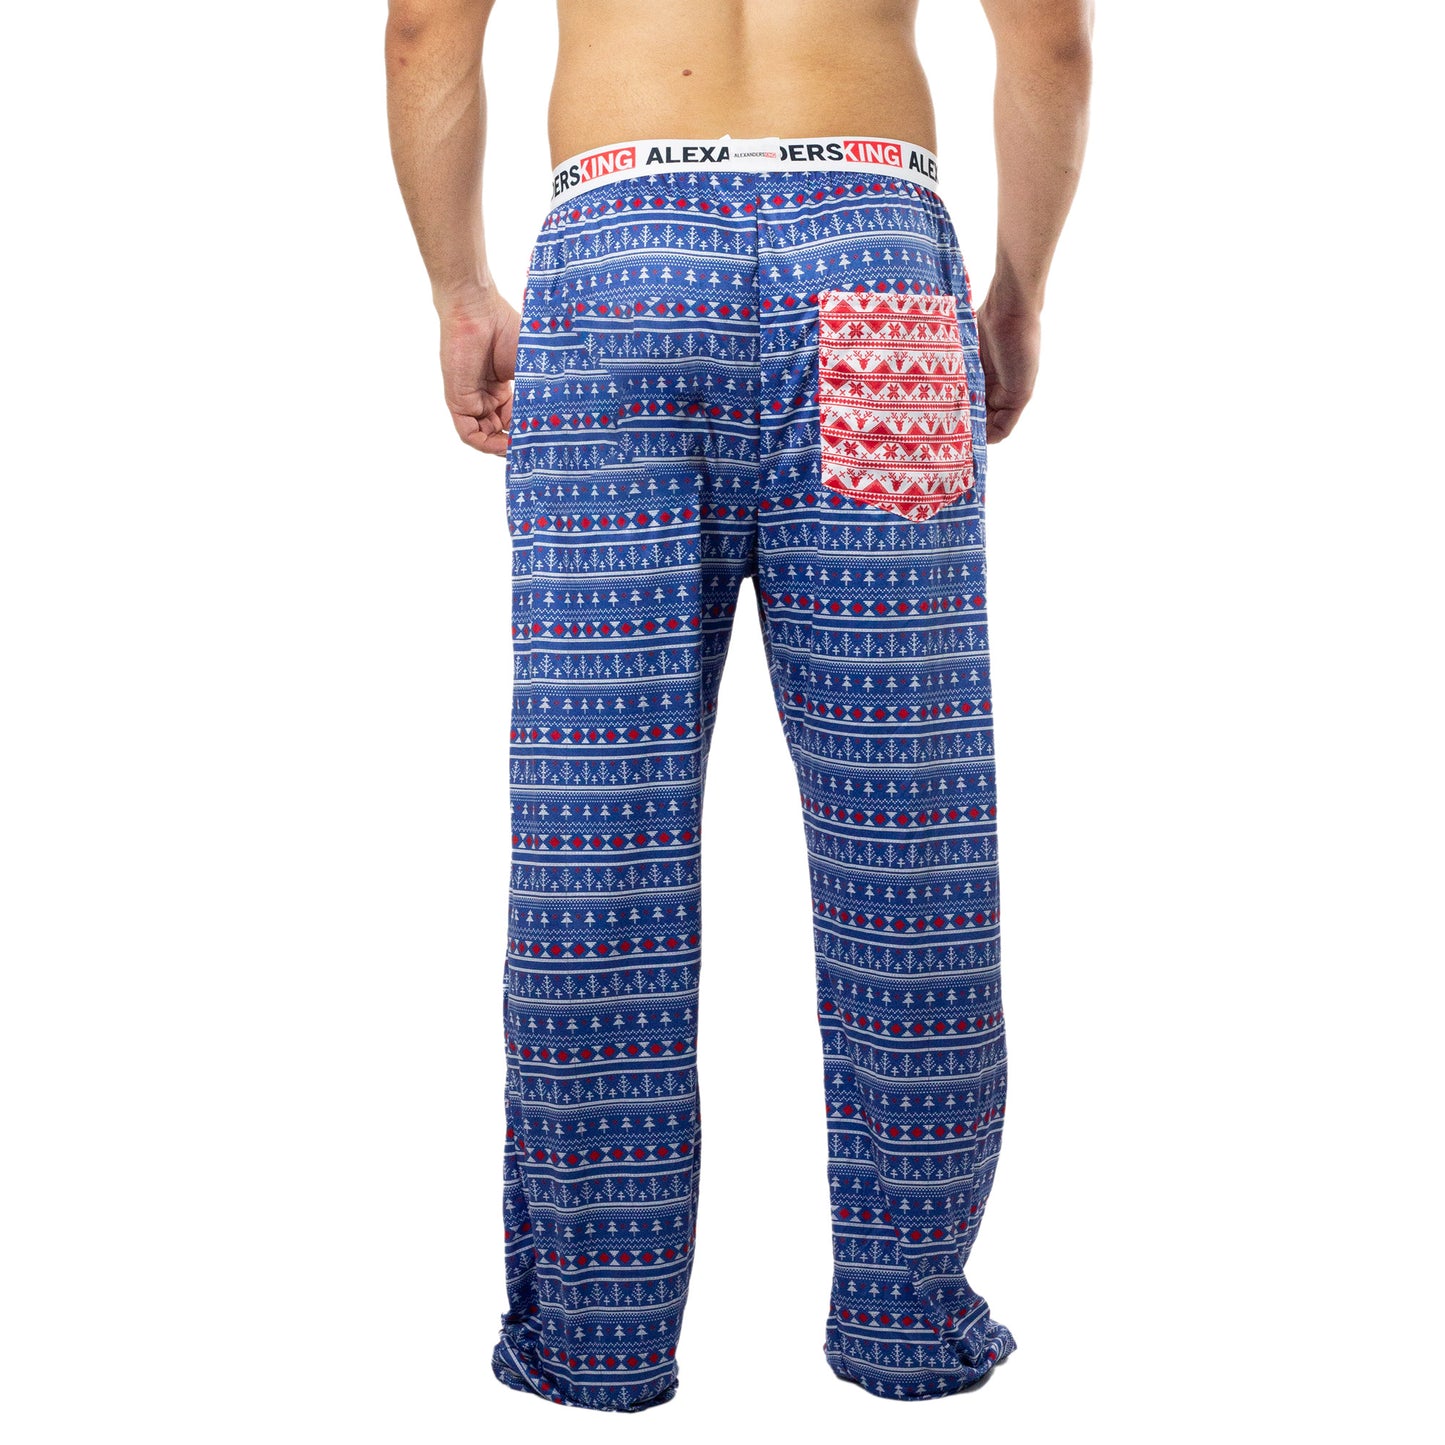 PJ0002 Pantalon Pijama Noche Navide̱a sublimado pinos azules, renos rojos en fondo blanco